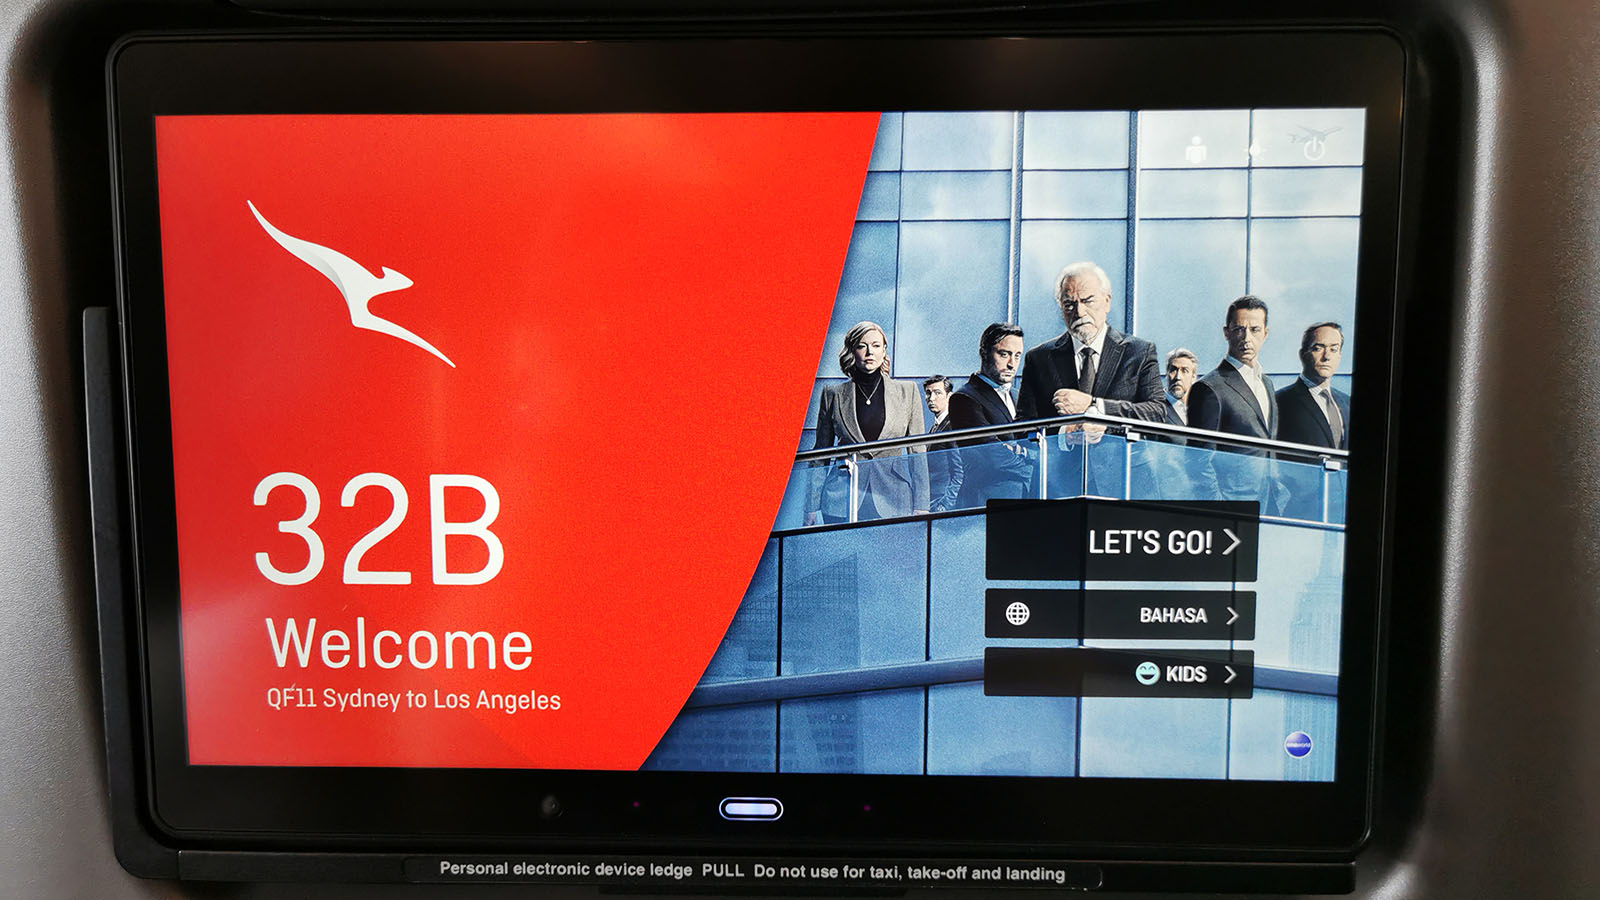 Welcome to Qantas A380 Premium Economy